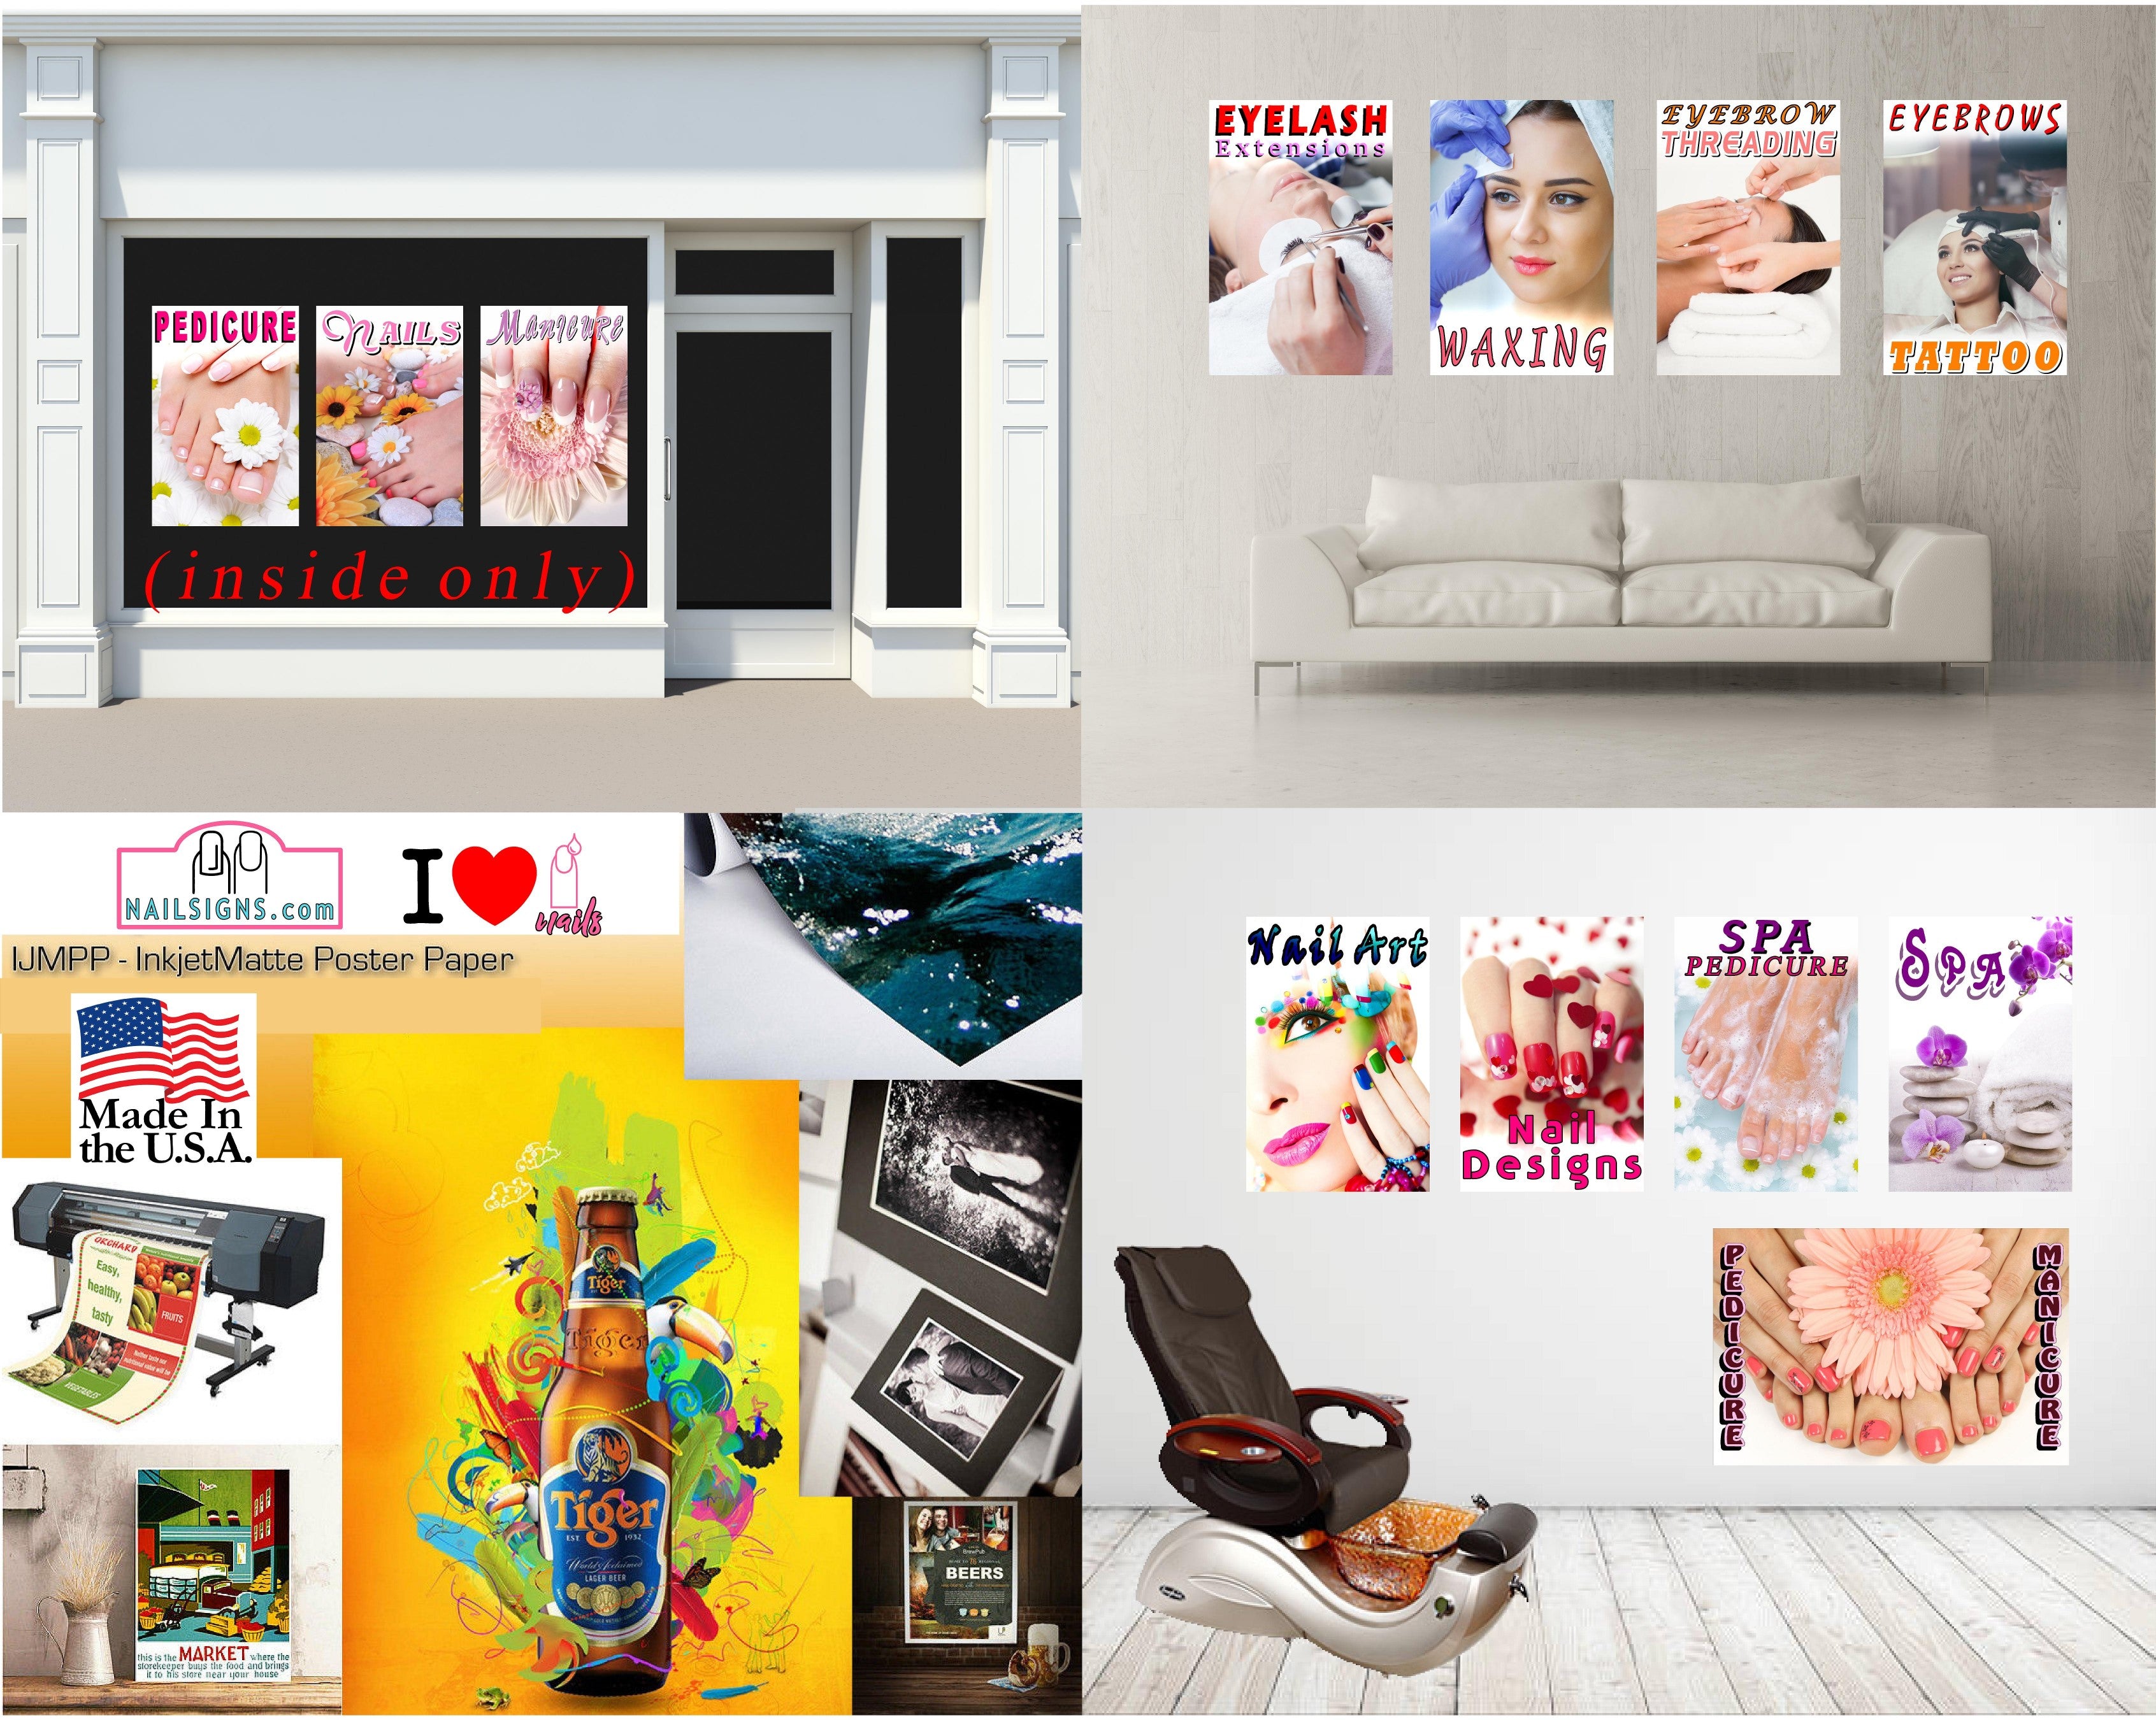 Pedicure & Manicure 11 Photo-Realistic Paper Poster Premium Matte Interior Inside Sign Advertising Marketing Wall Window Non-Laminated Vertical